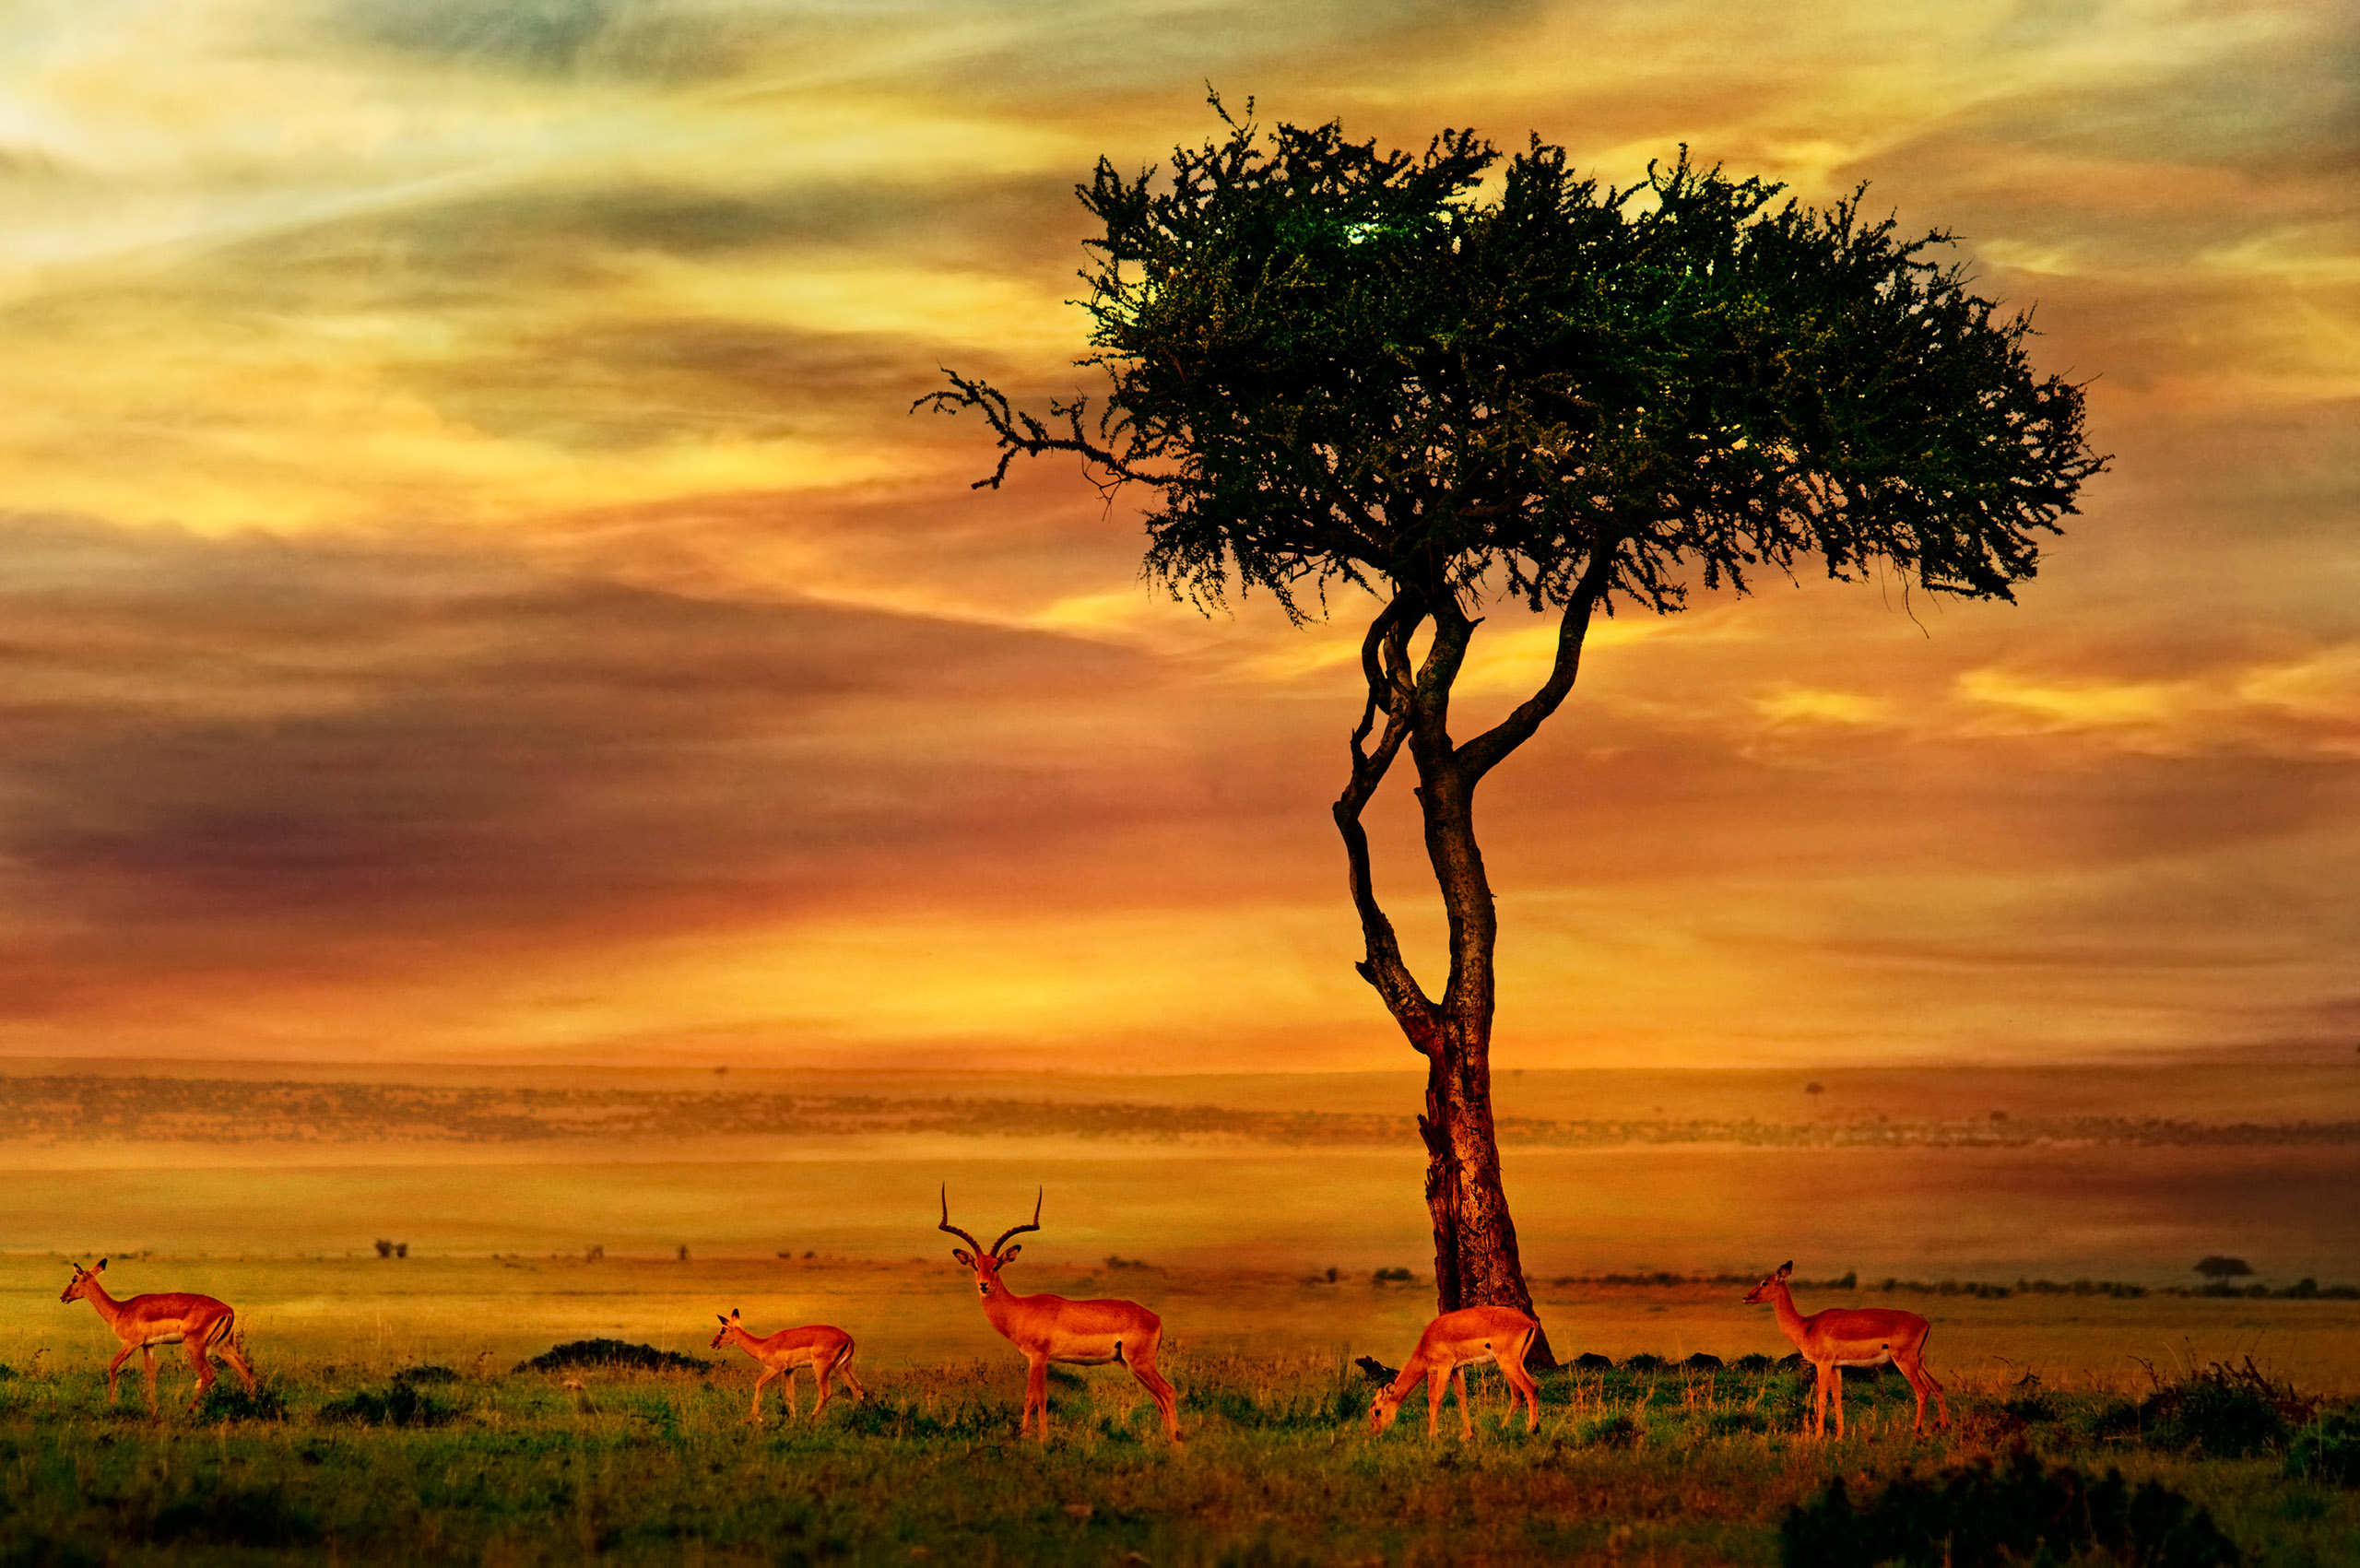 Impala at African Sunset Background